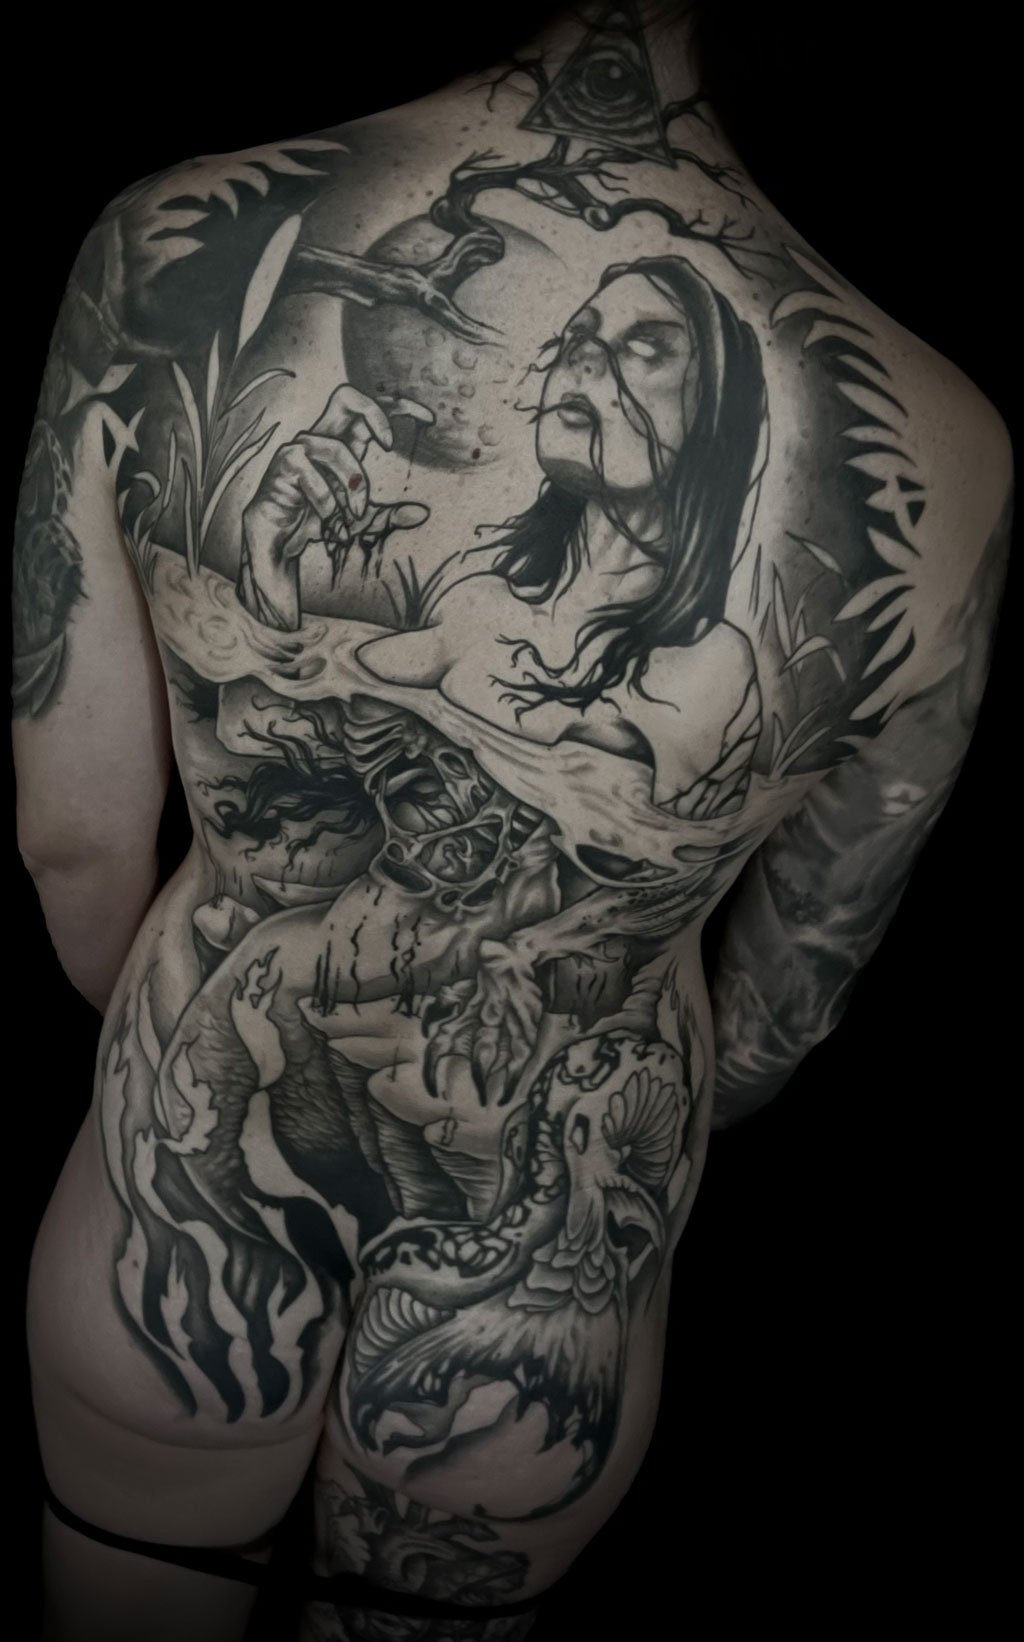 Tattoo Anansi Studio München Munich Haidhausen David healed backpiece project full back dark nixon mermaid swamp lake best dark horror blackwork